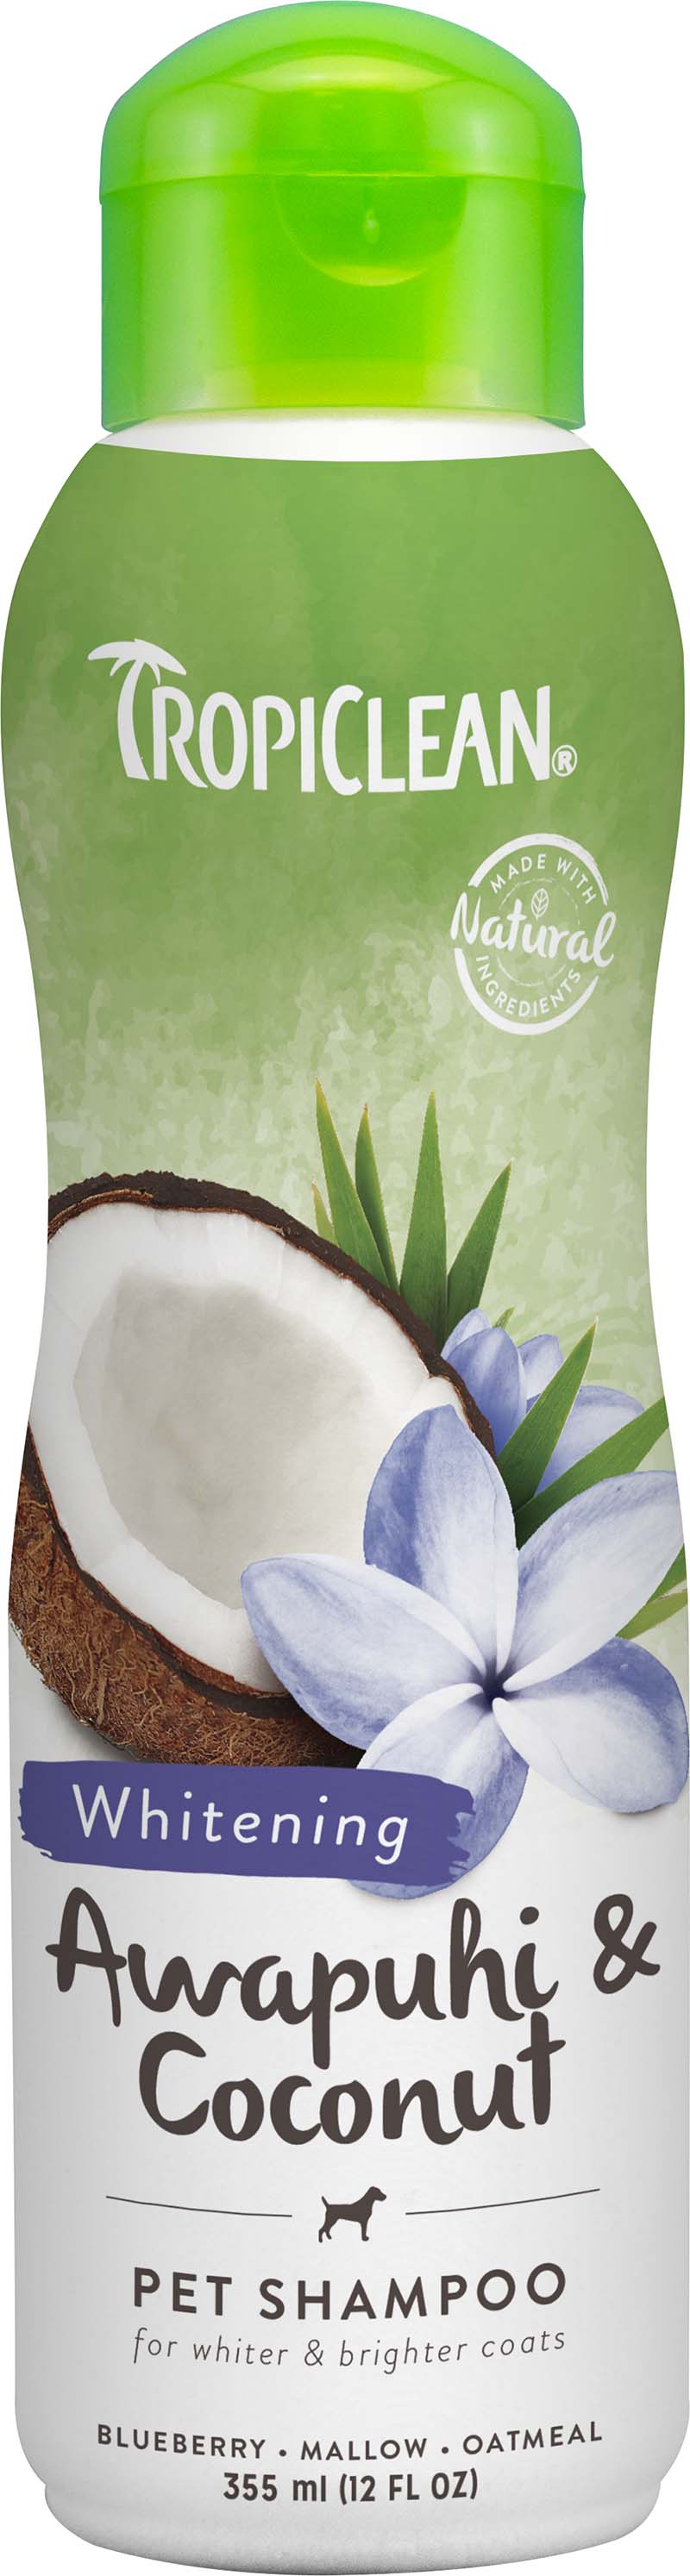 Tropiclean - awapuhi&coconut shampoo - 355ml (719.2110)